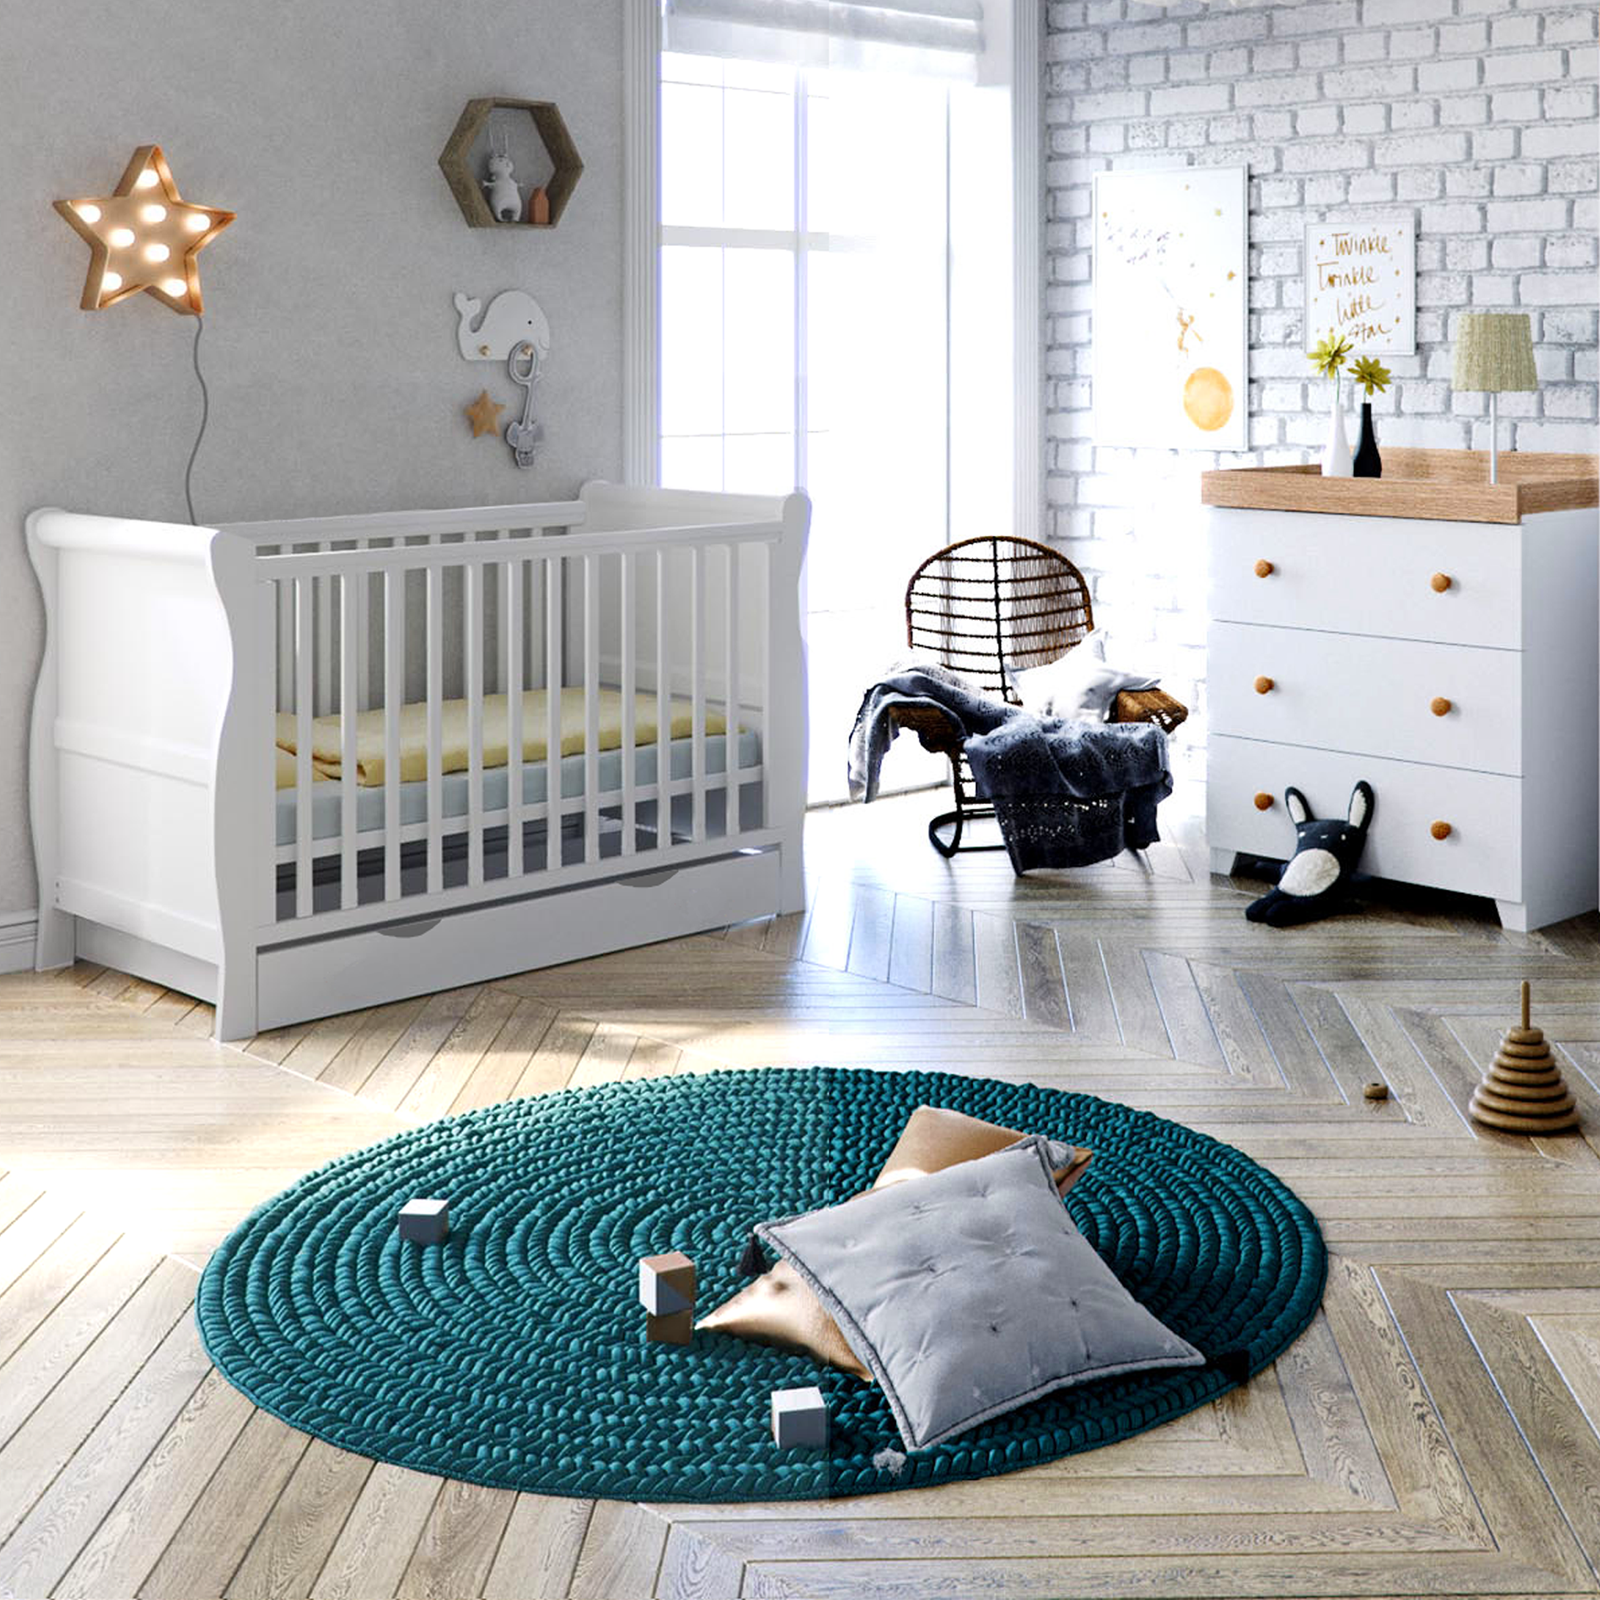 Puggle Alderley Sleigh Cot Bed 5 Piece Nursery Furniture Set With Maxi Air Cool Mattress - White & Oak